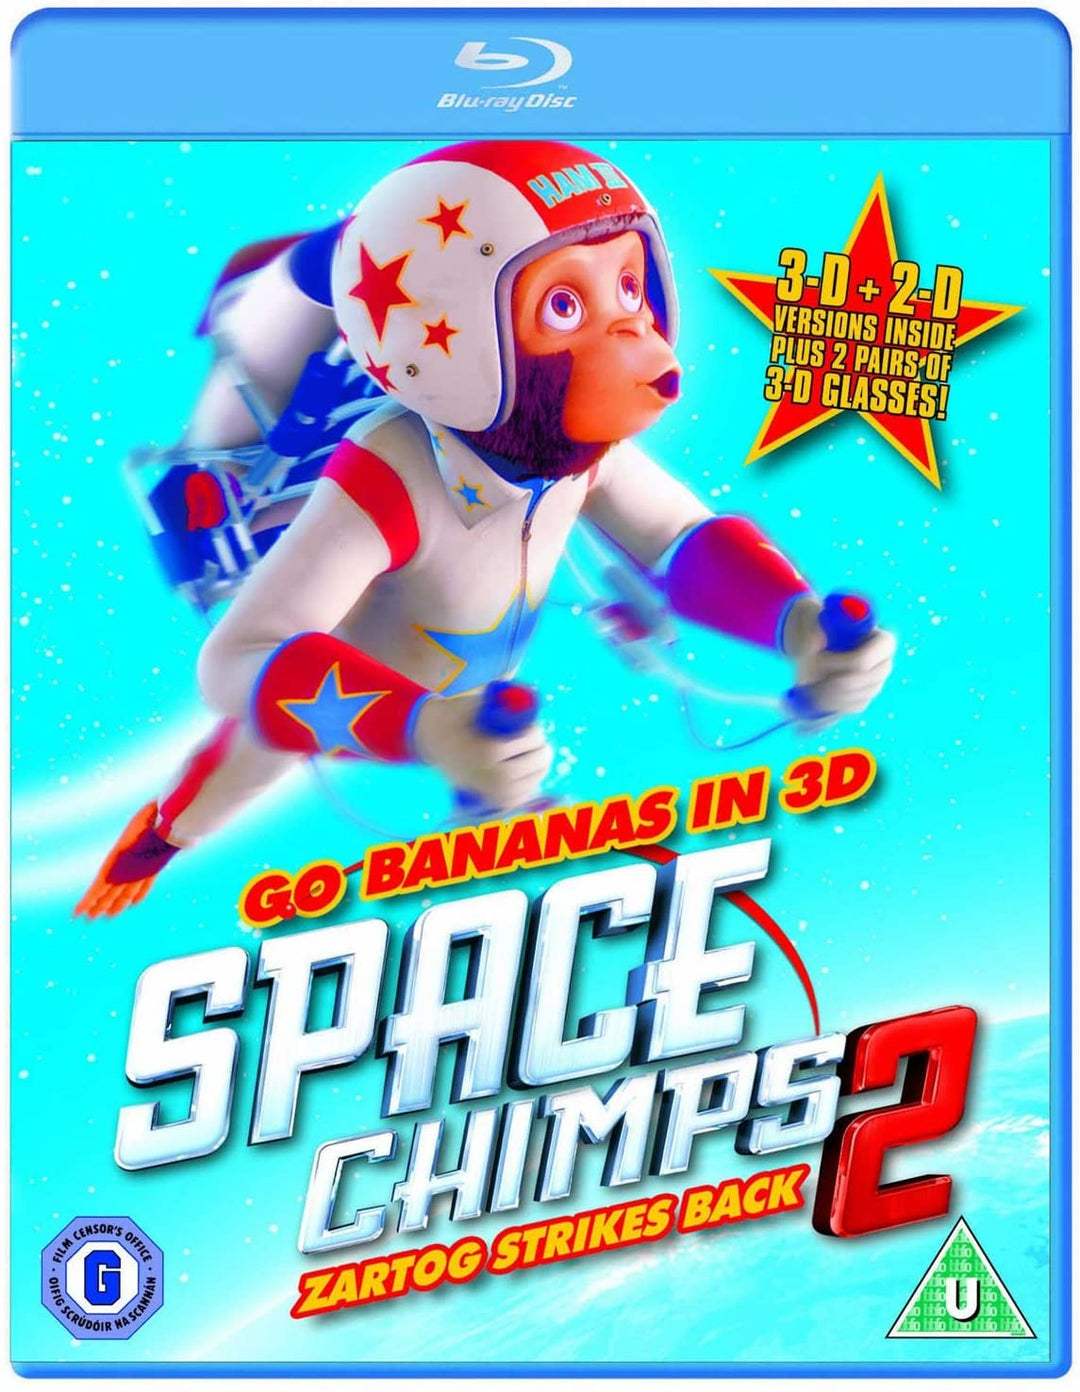 Space Chimps 2 - Zartog Contraataca [Blu-ray]